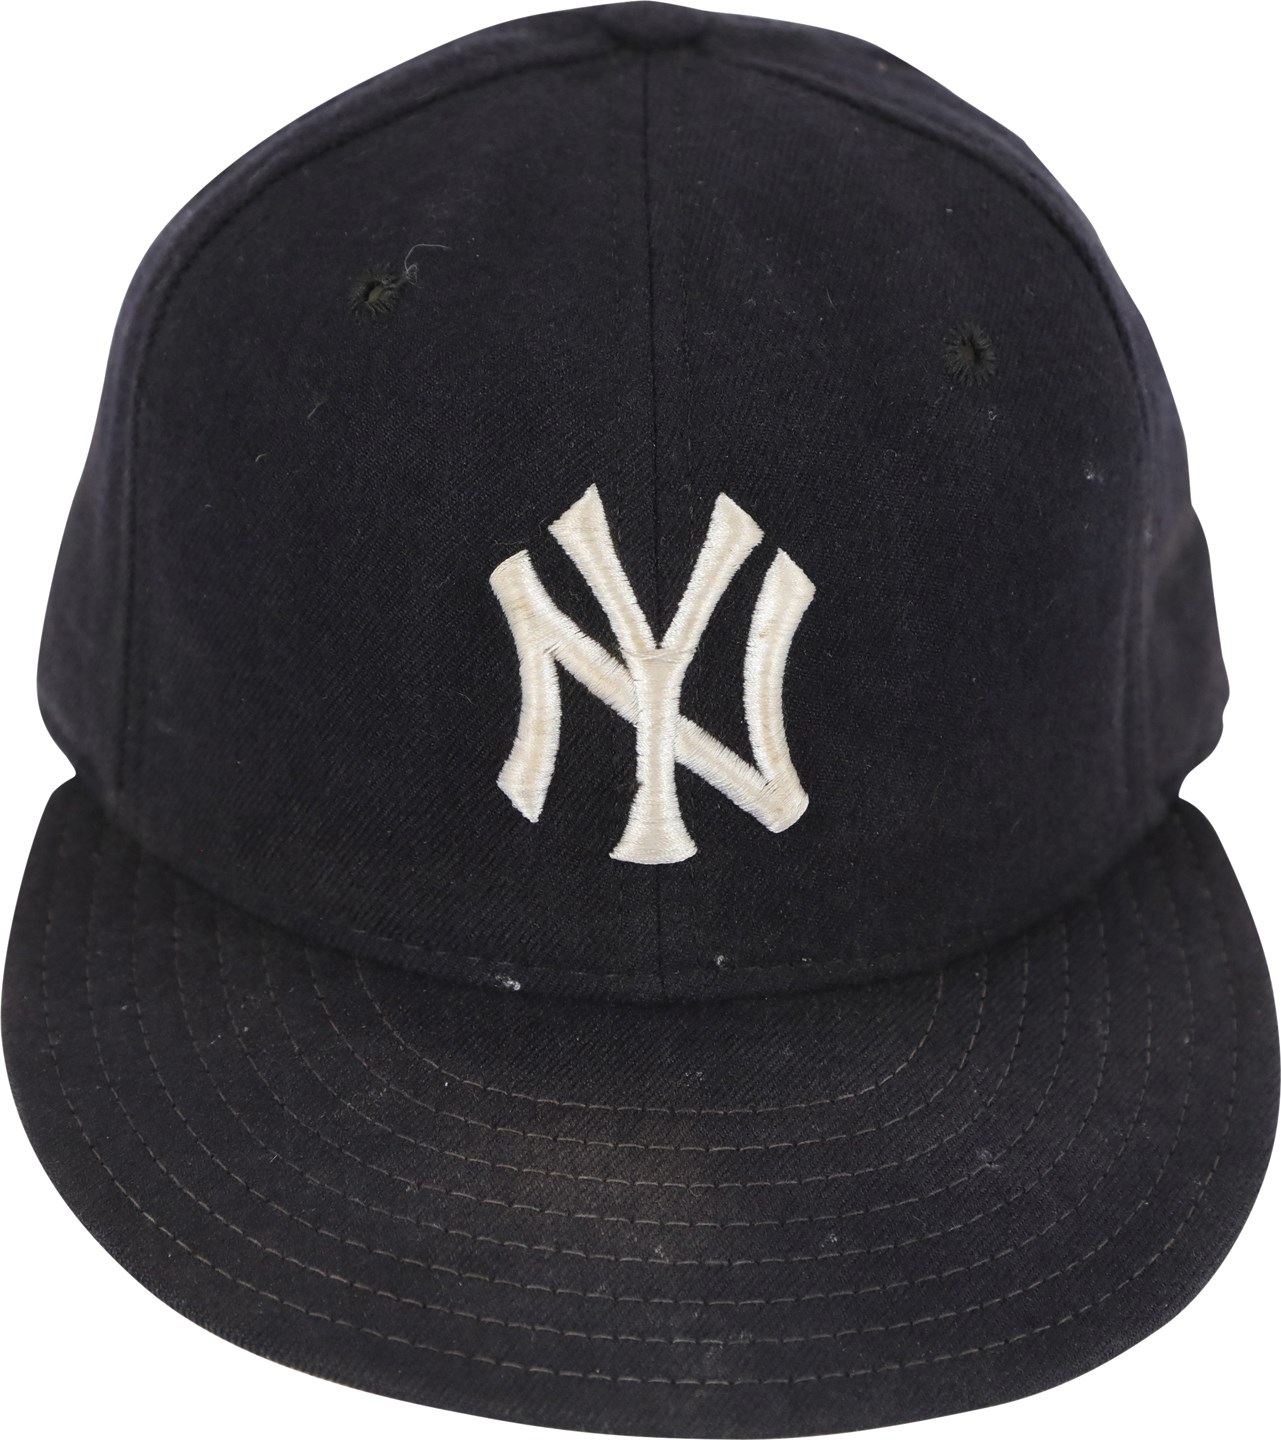 Baseball Equipment - Circa 1995 Bernie Williams New York Yankees Game Used Hat